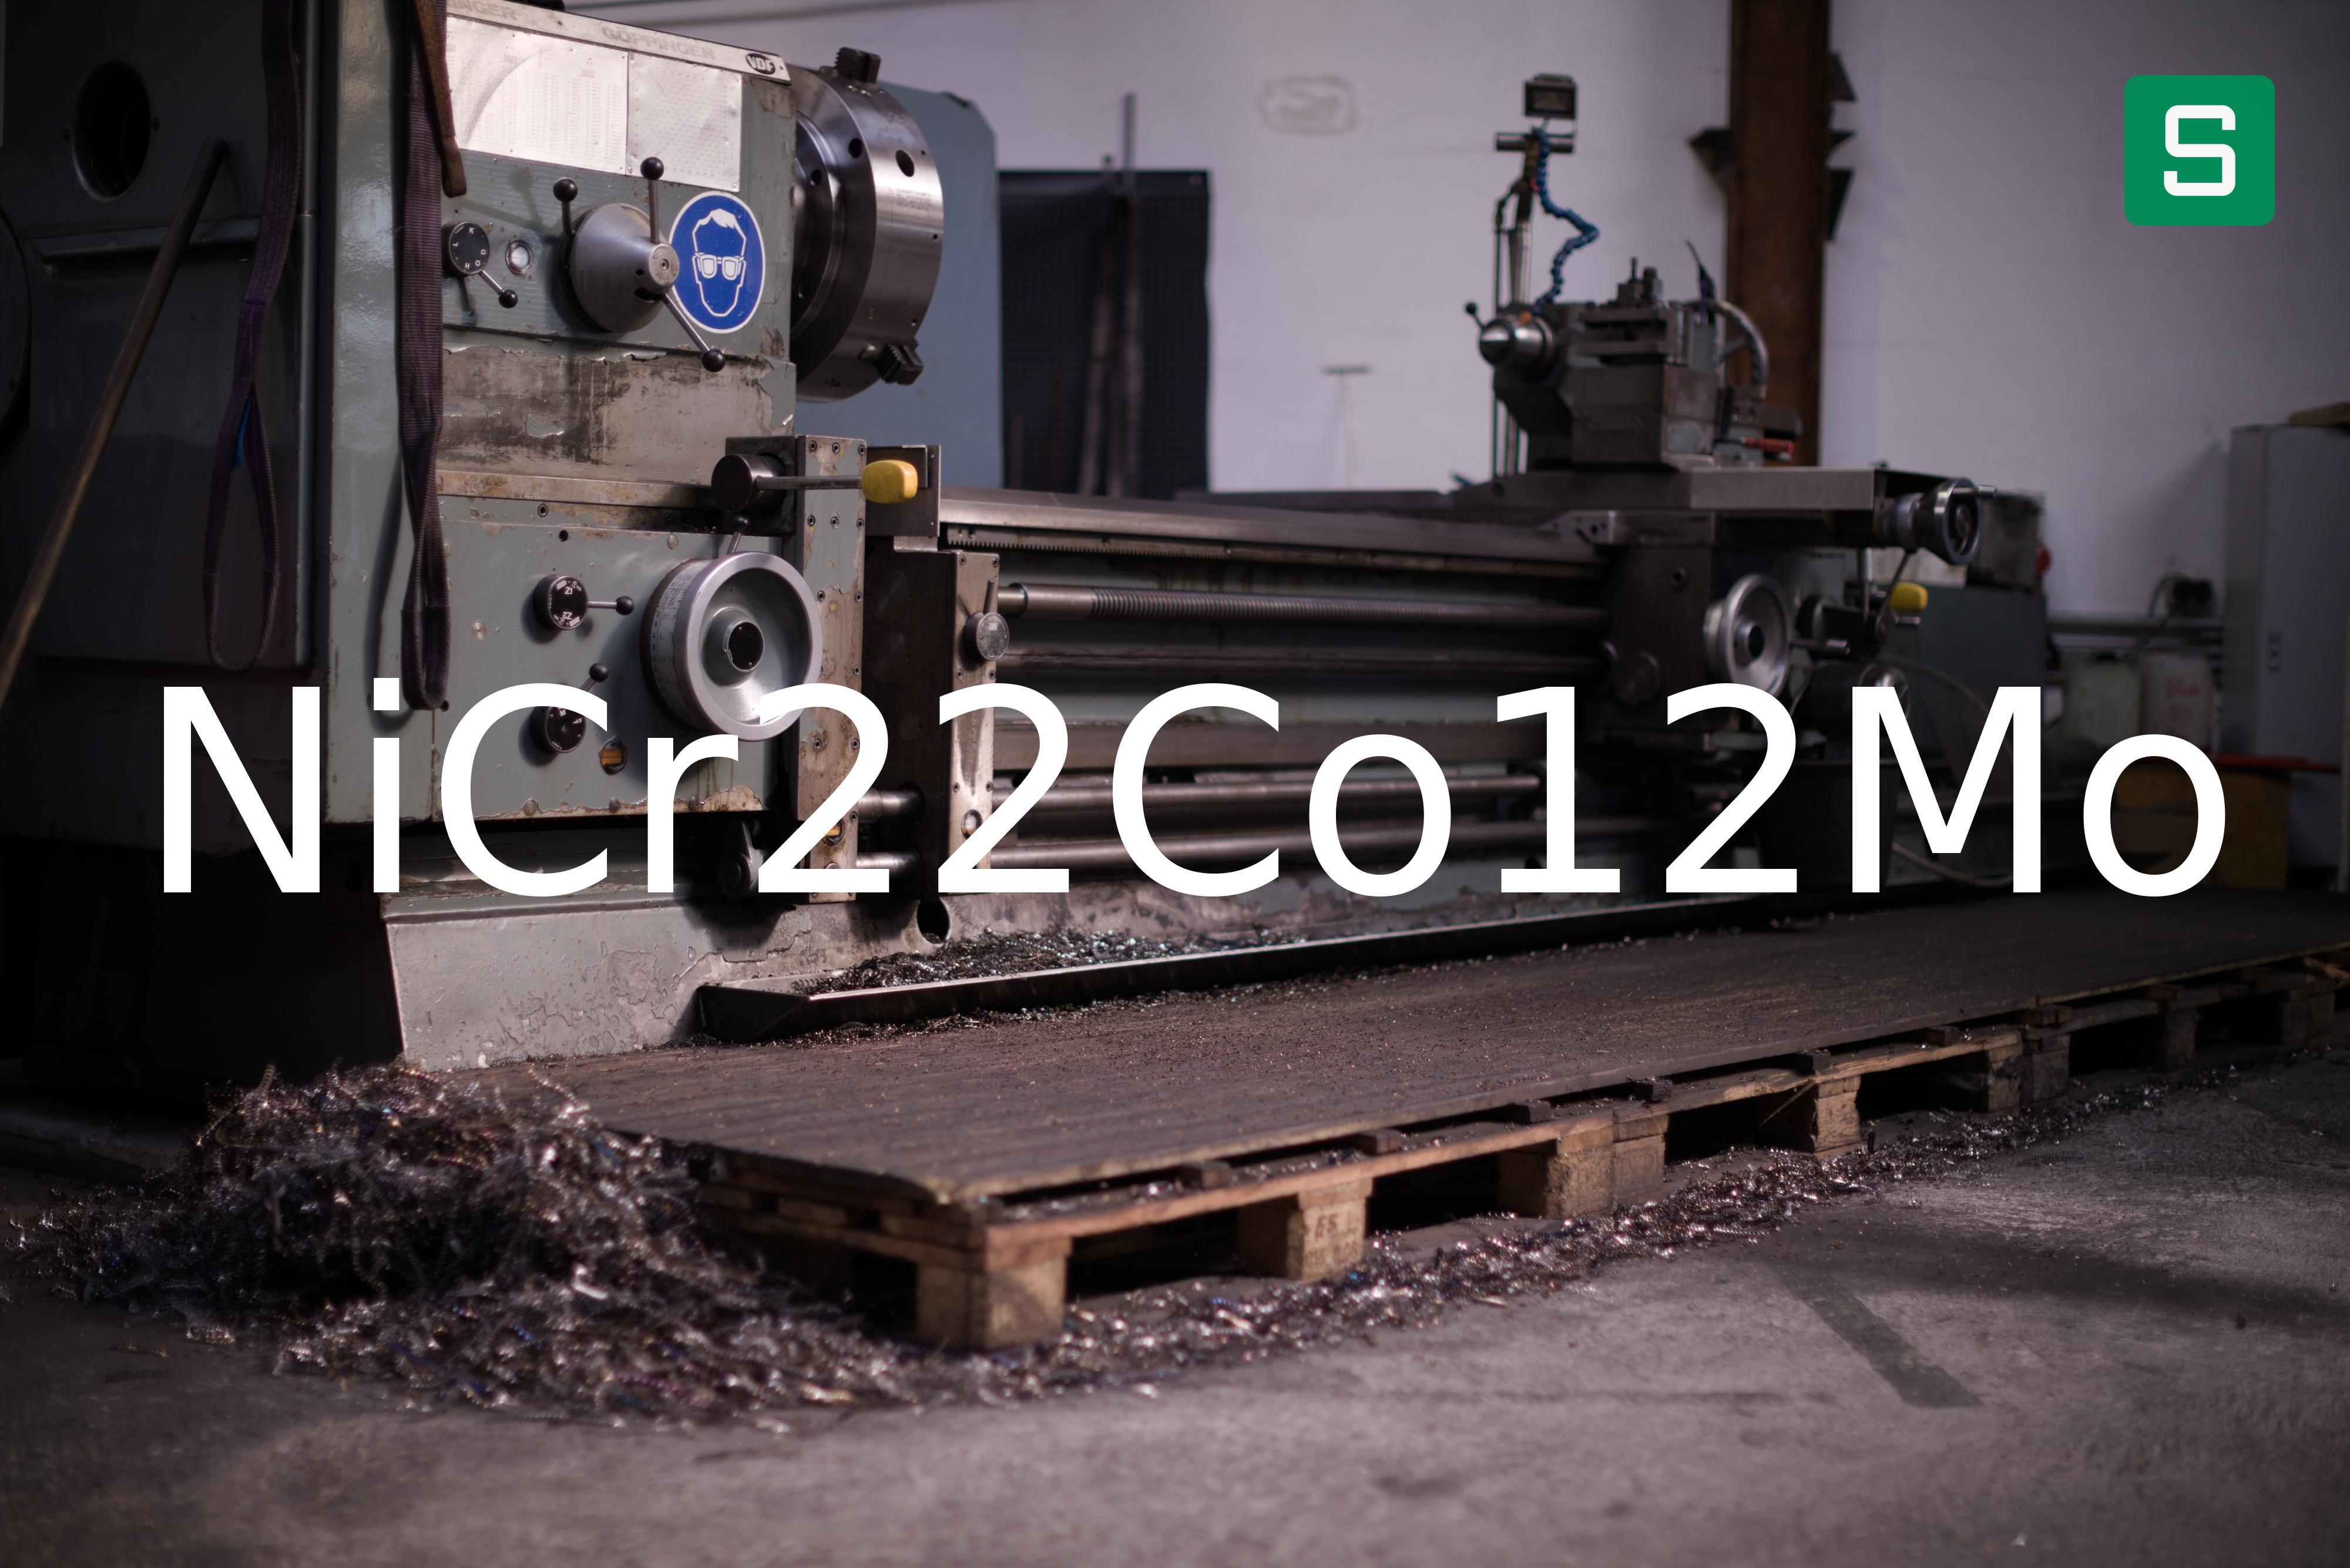 Steel Material: NiCr22Co12Mo